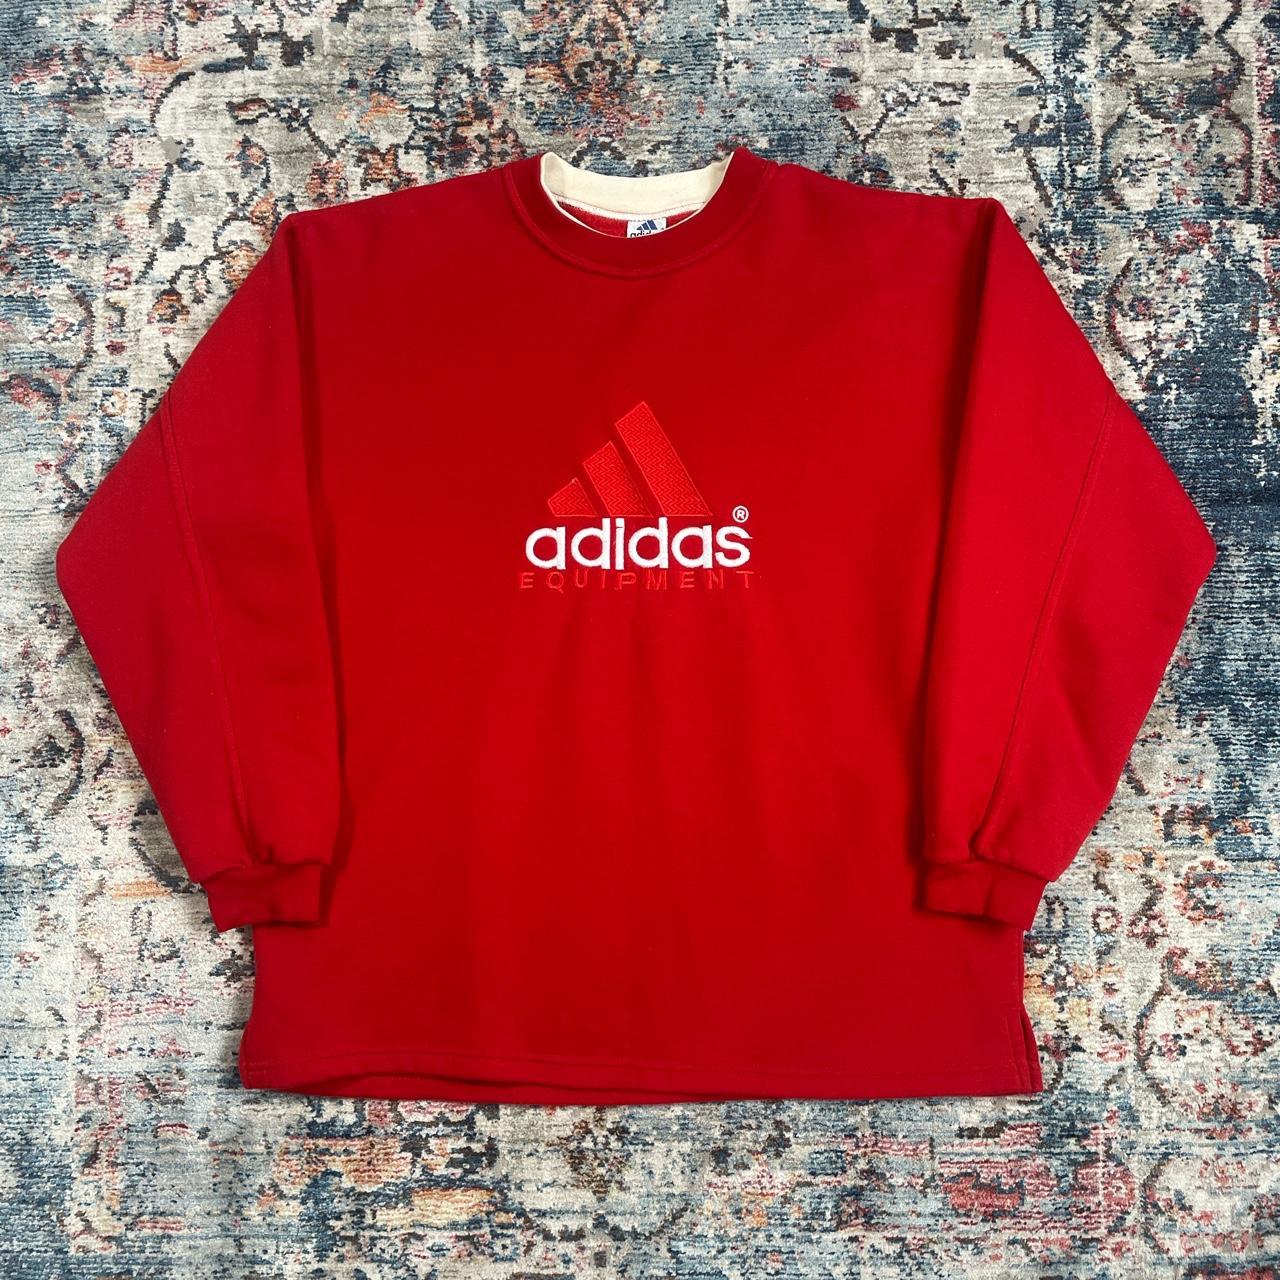 Vintage Adidas Equipment Embroidered Red Sweatshirt